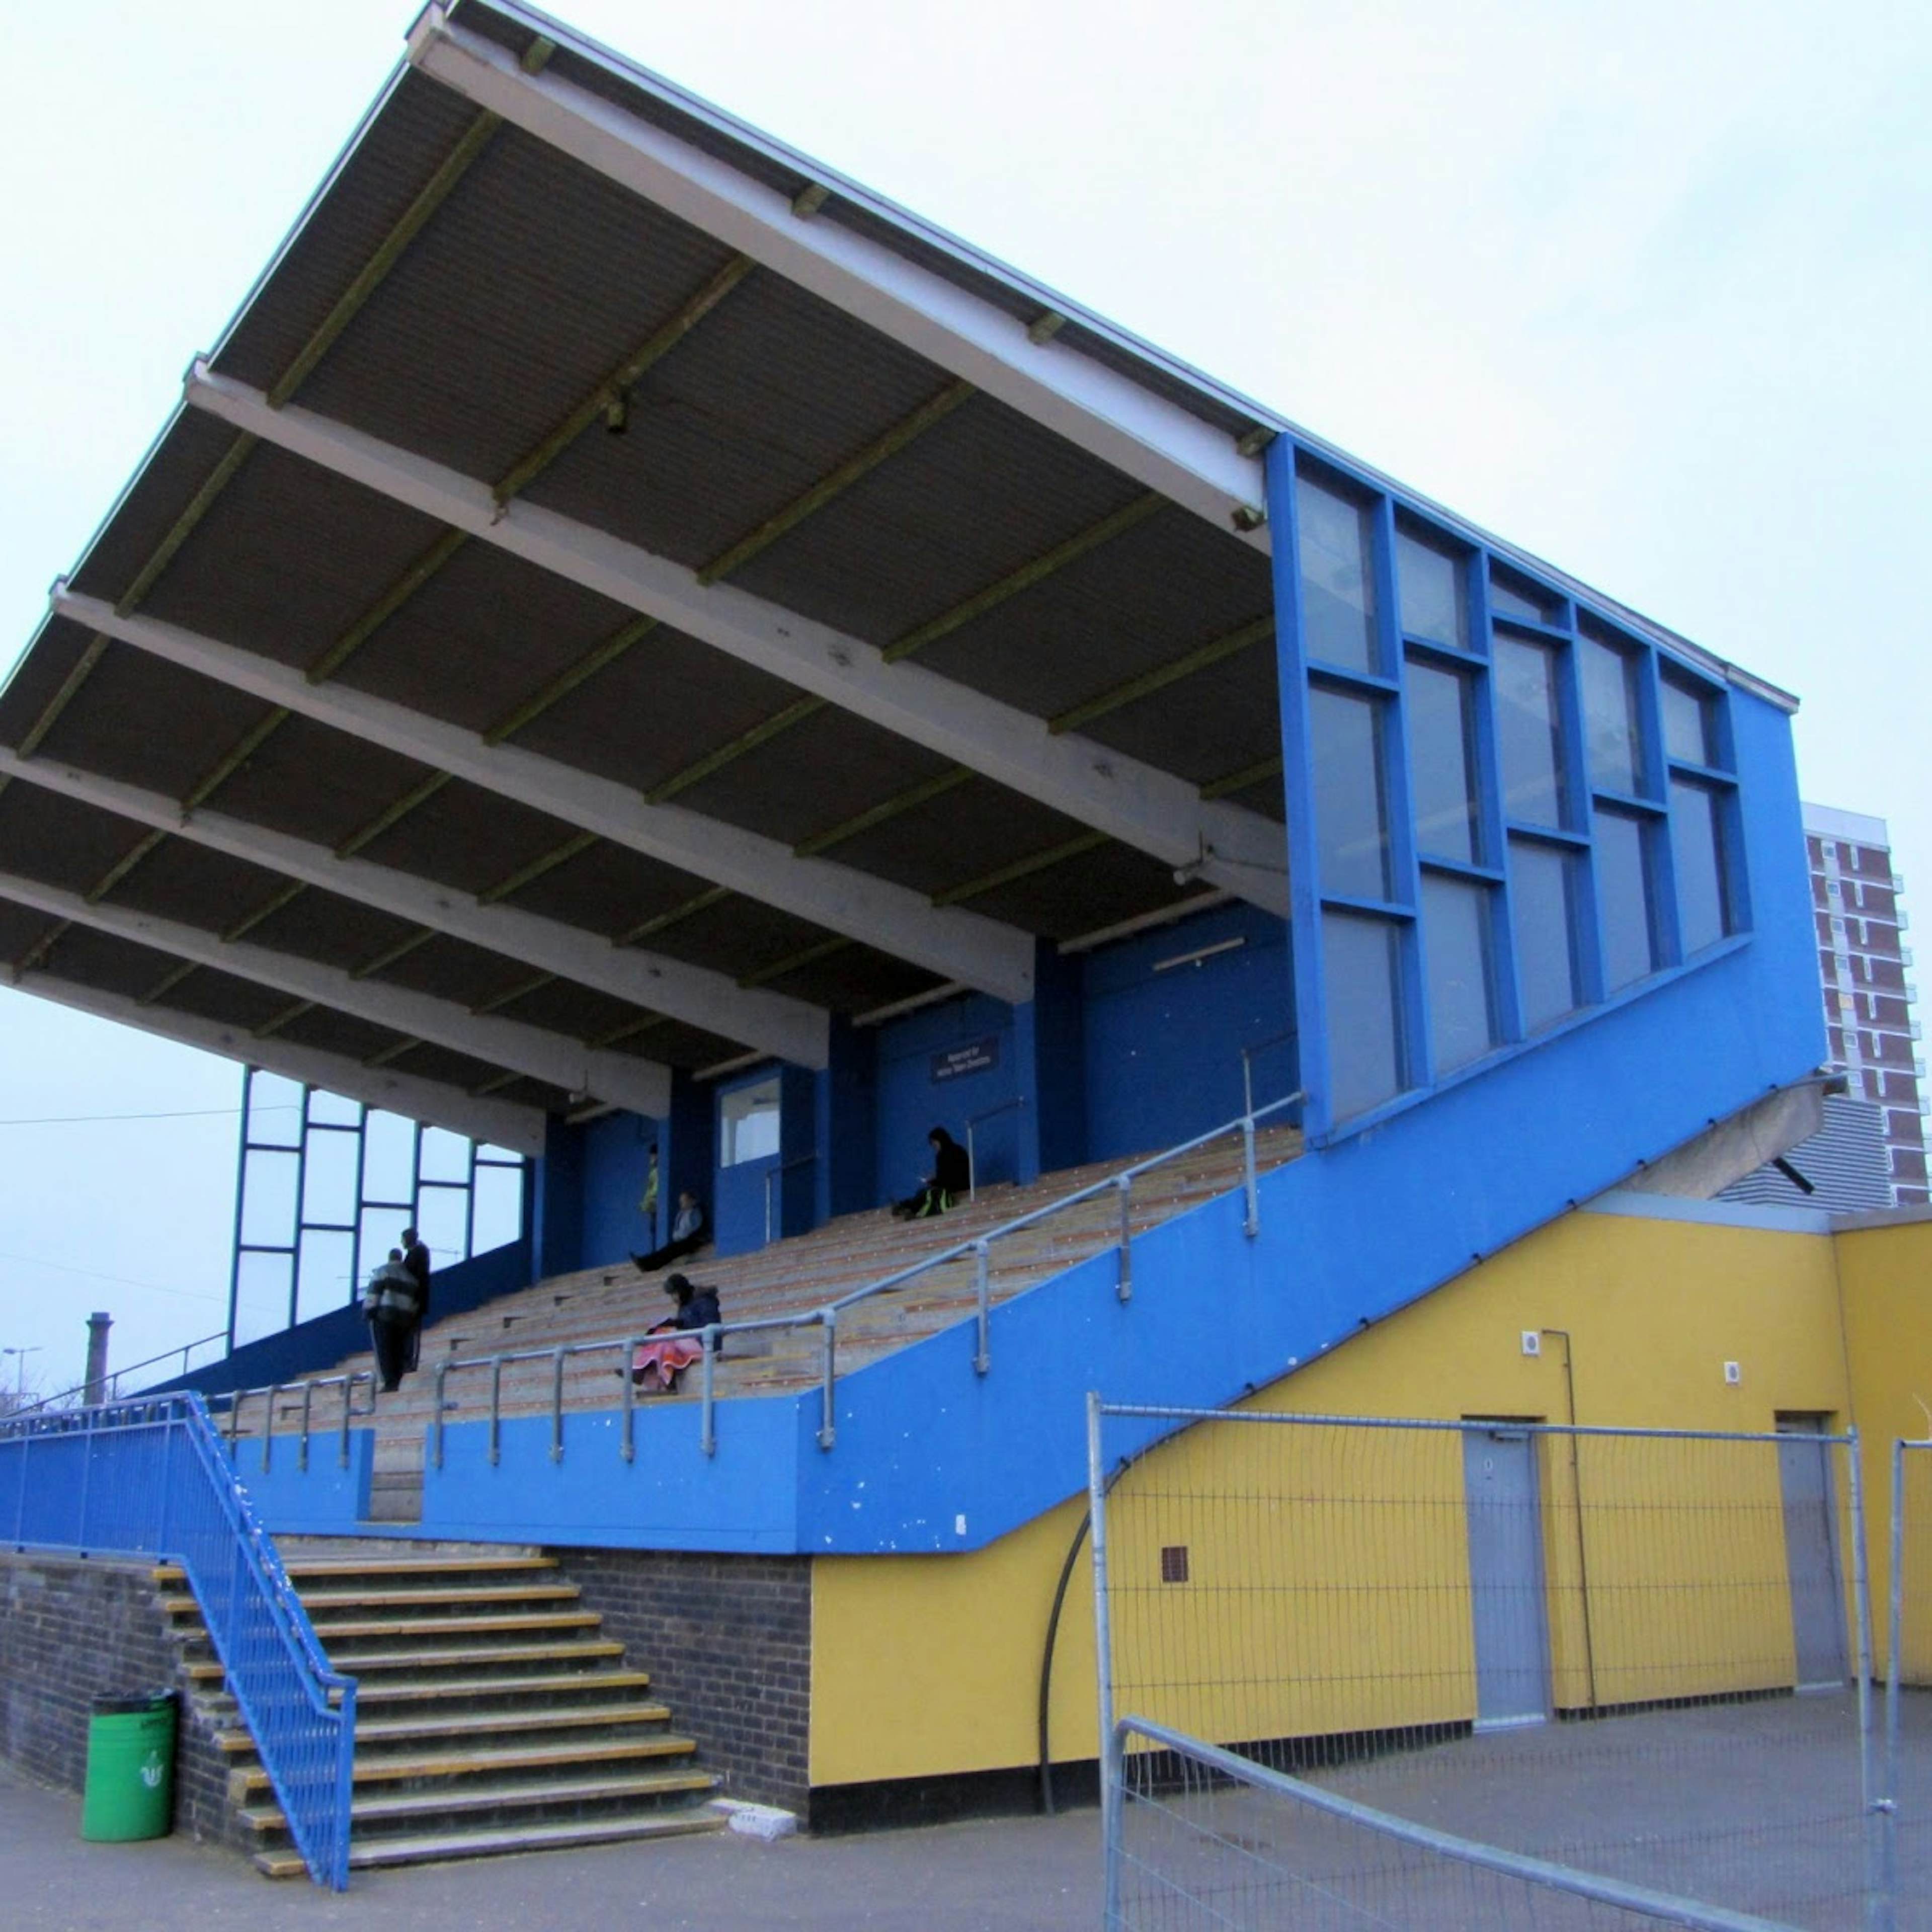 Mile End Park Leisure Centre and Stadium - image 2